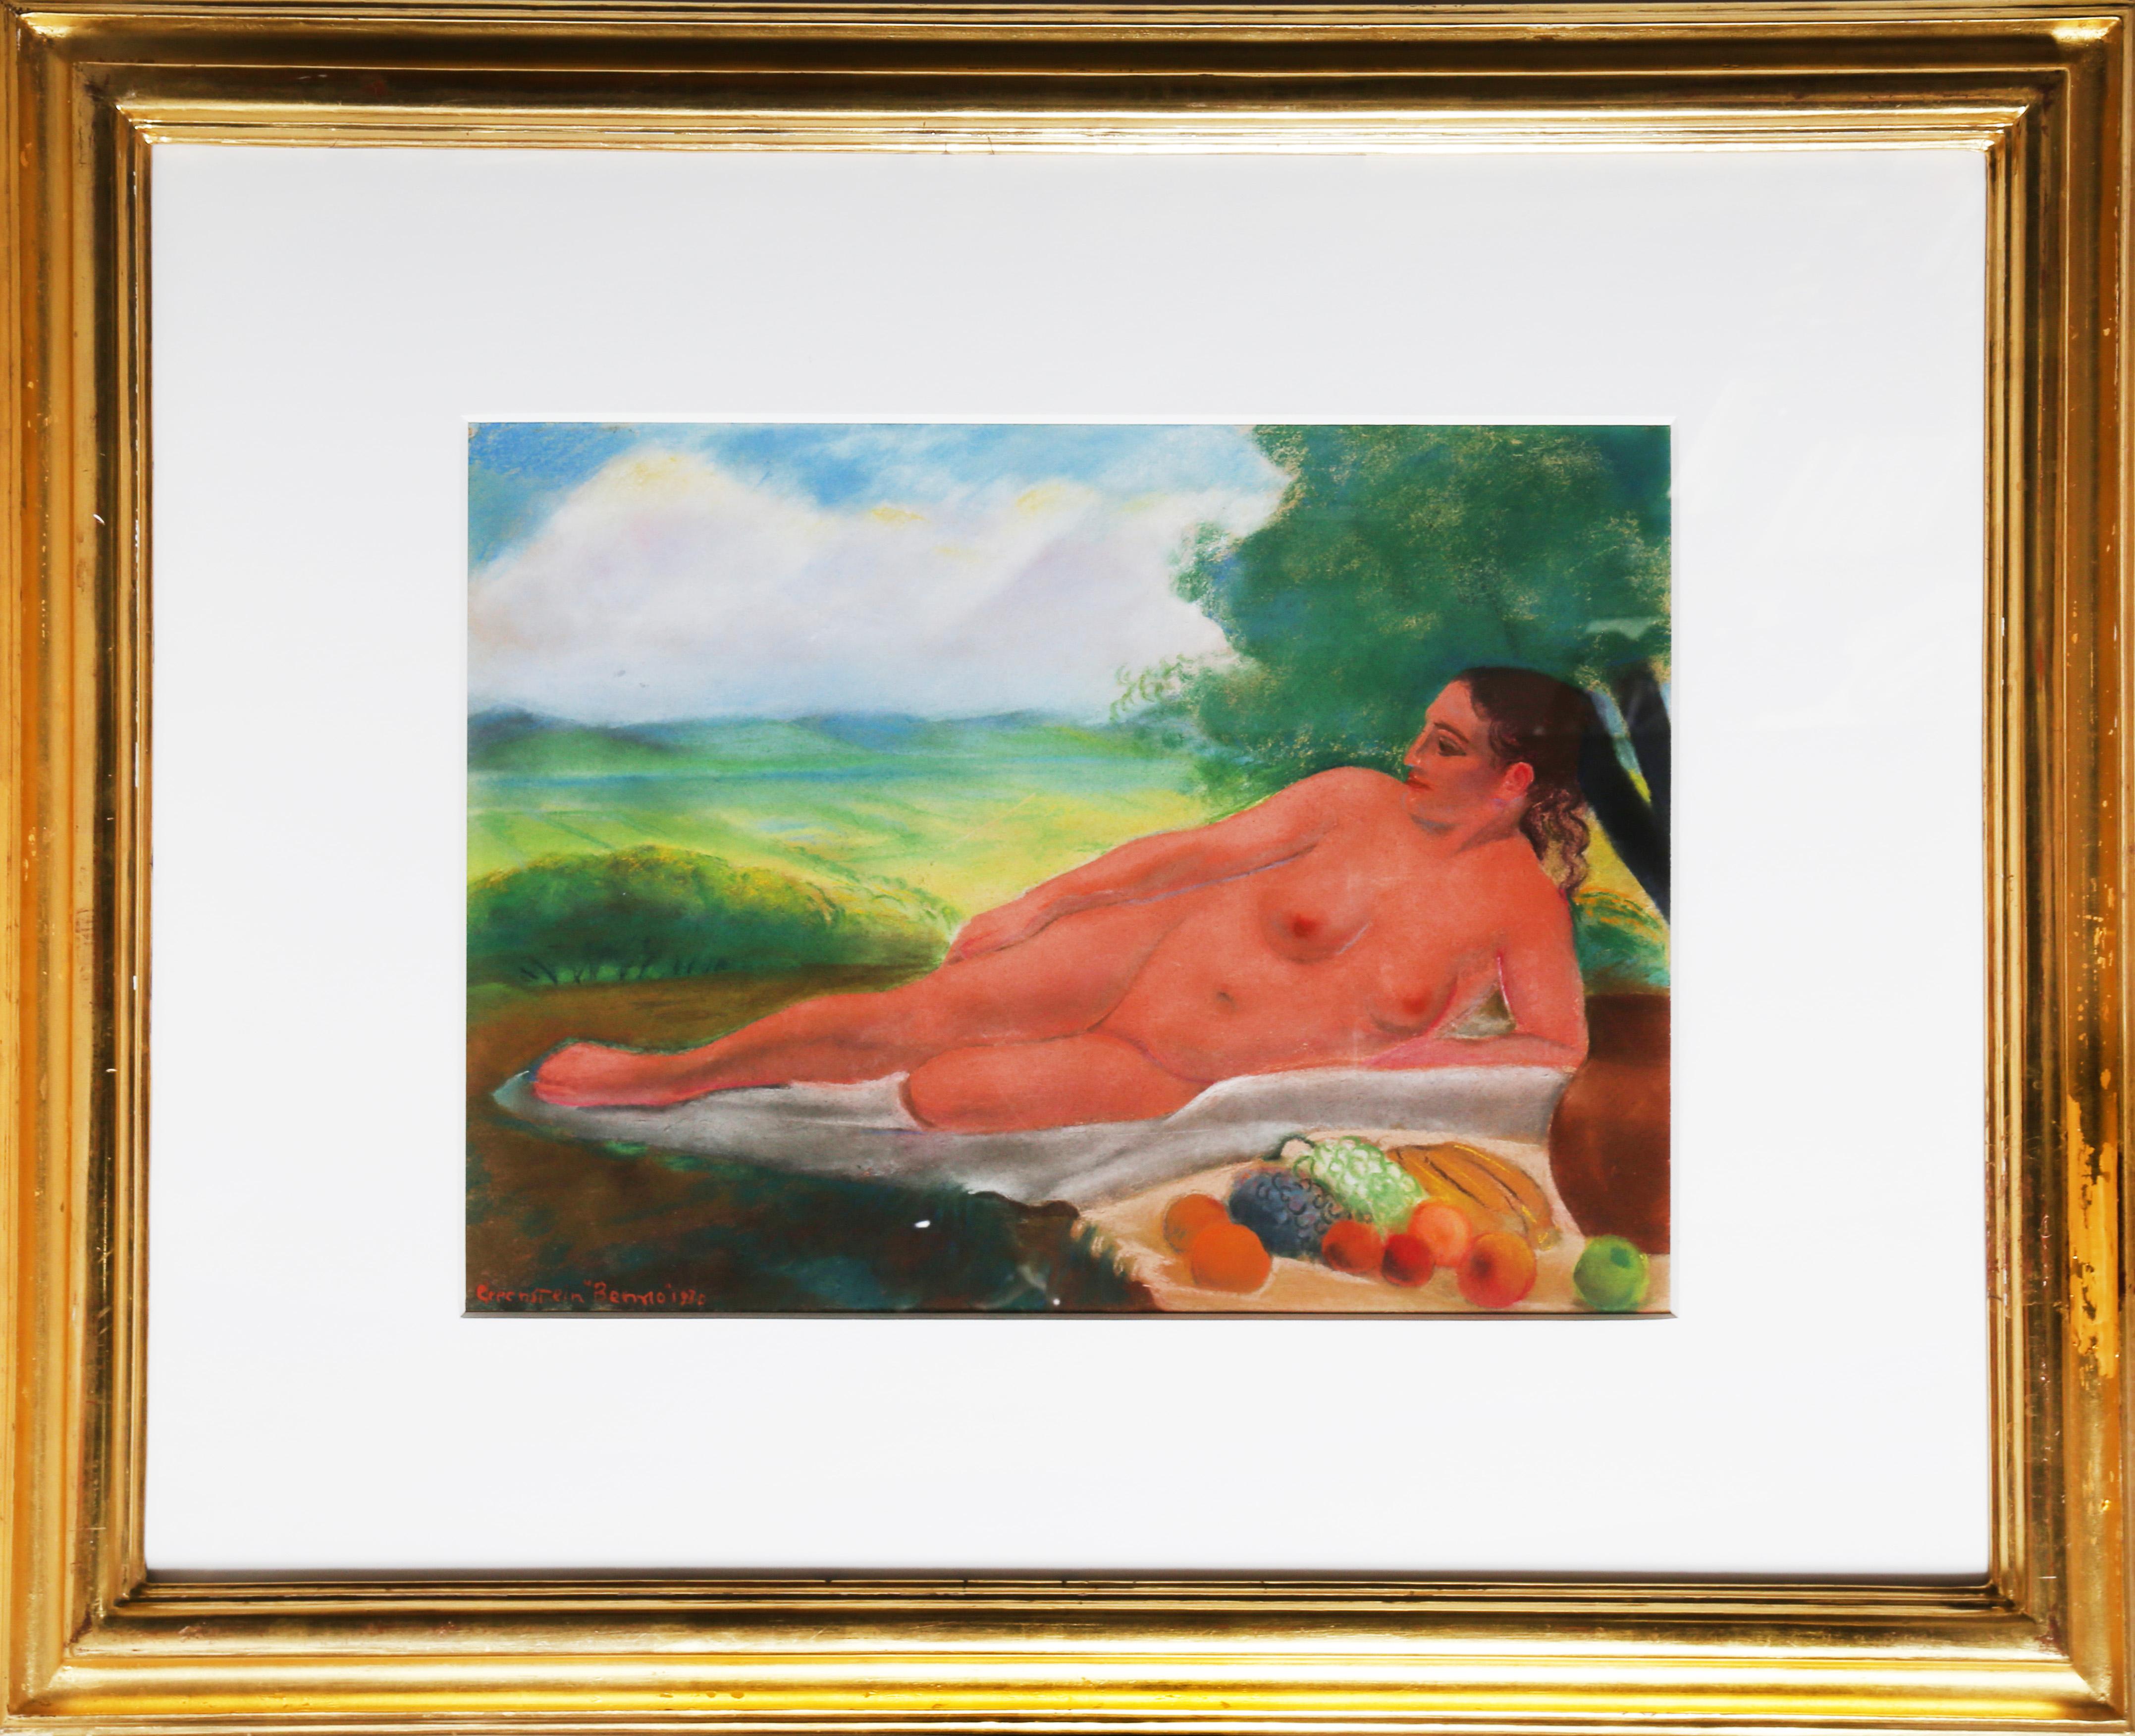 Nude Benjamin G. Benno - Paysage pastoral avec odalisque couchée et fruits